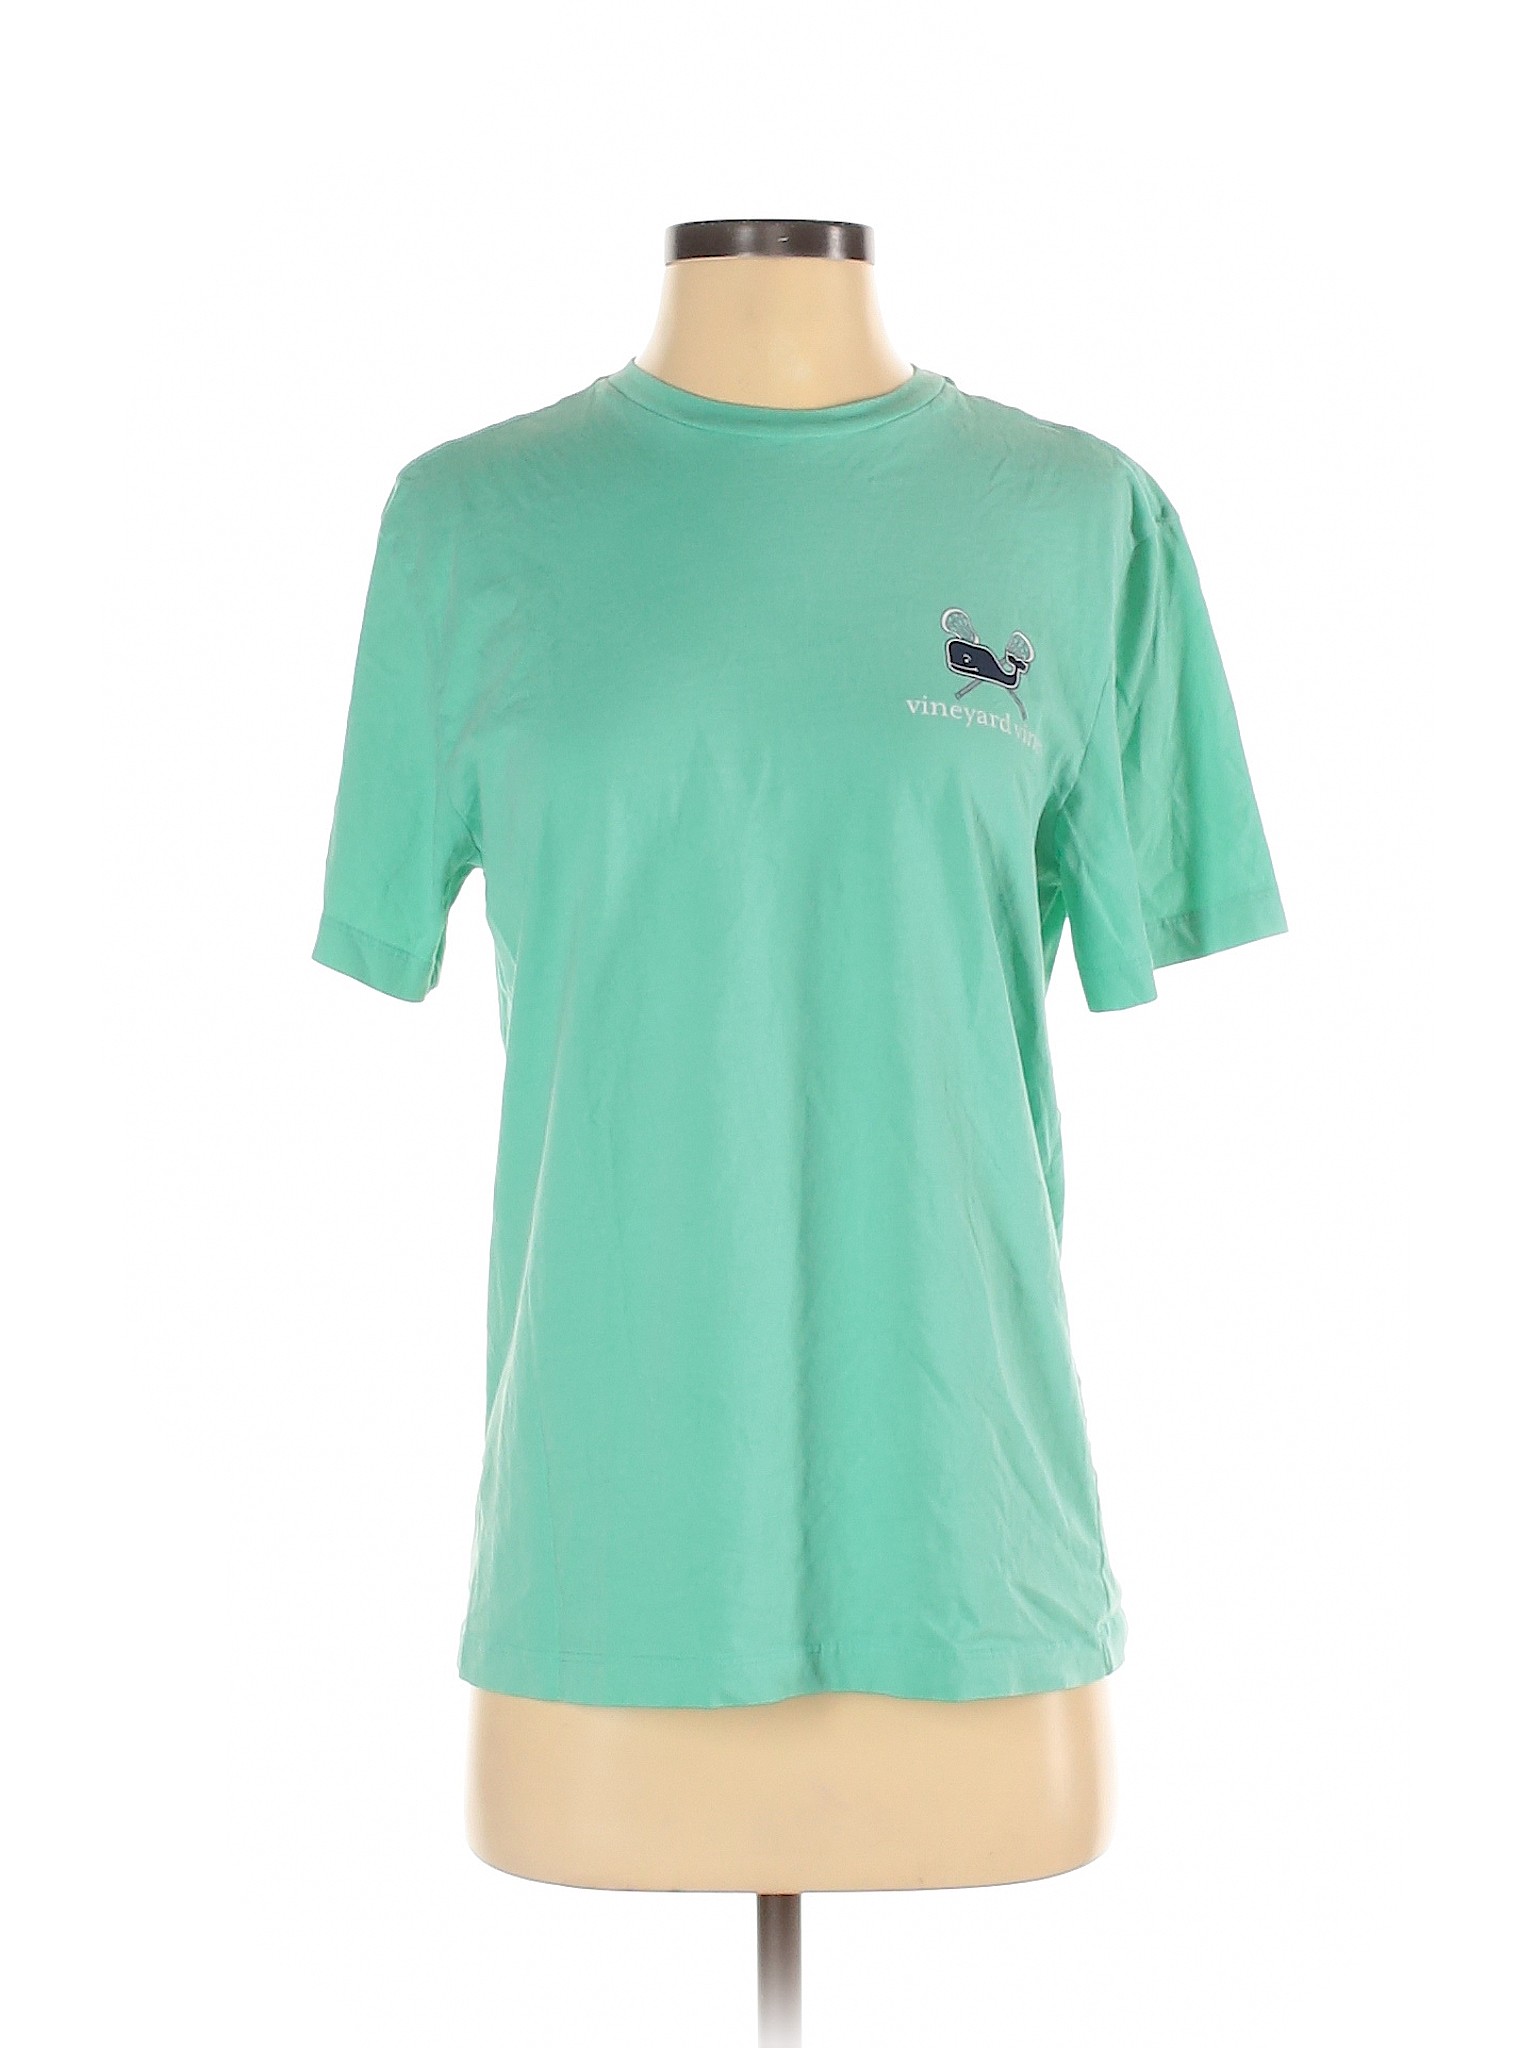 Vineyard Vines Women Blue Short Sleeve T-Shirt XS | eBay